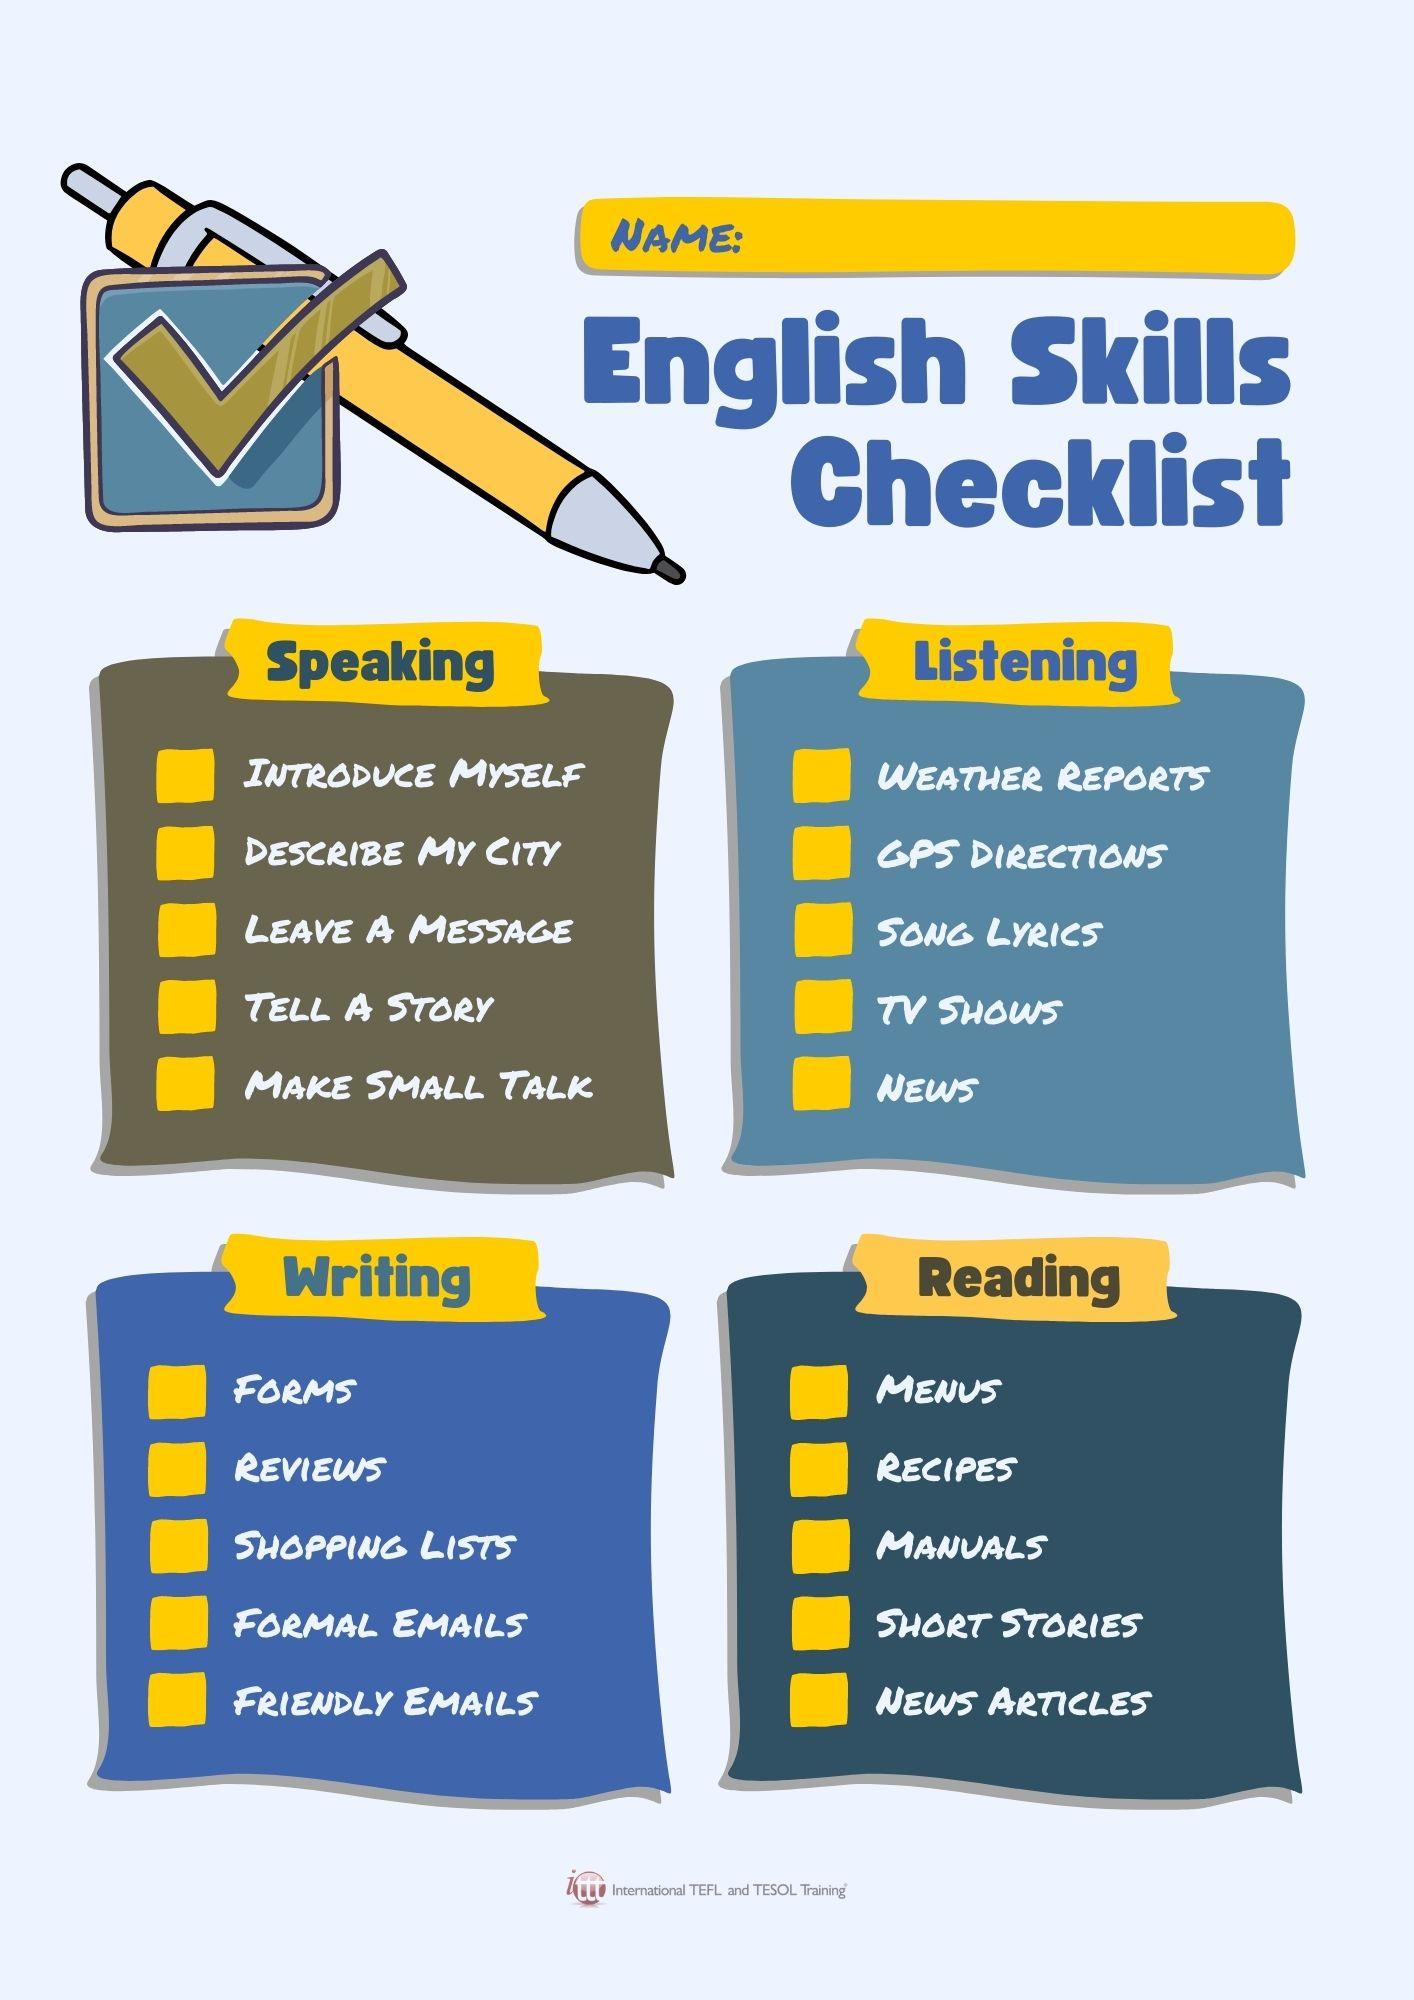 Grammar corner English Skills Checklist